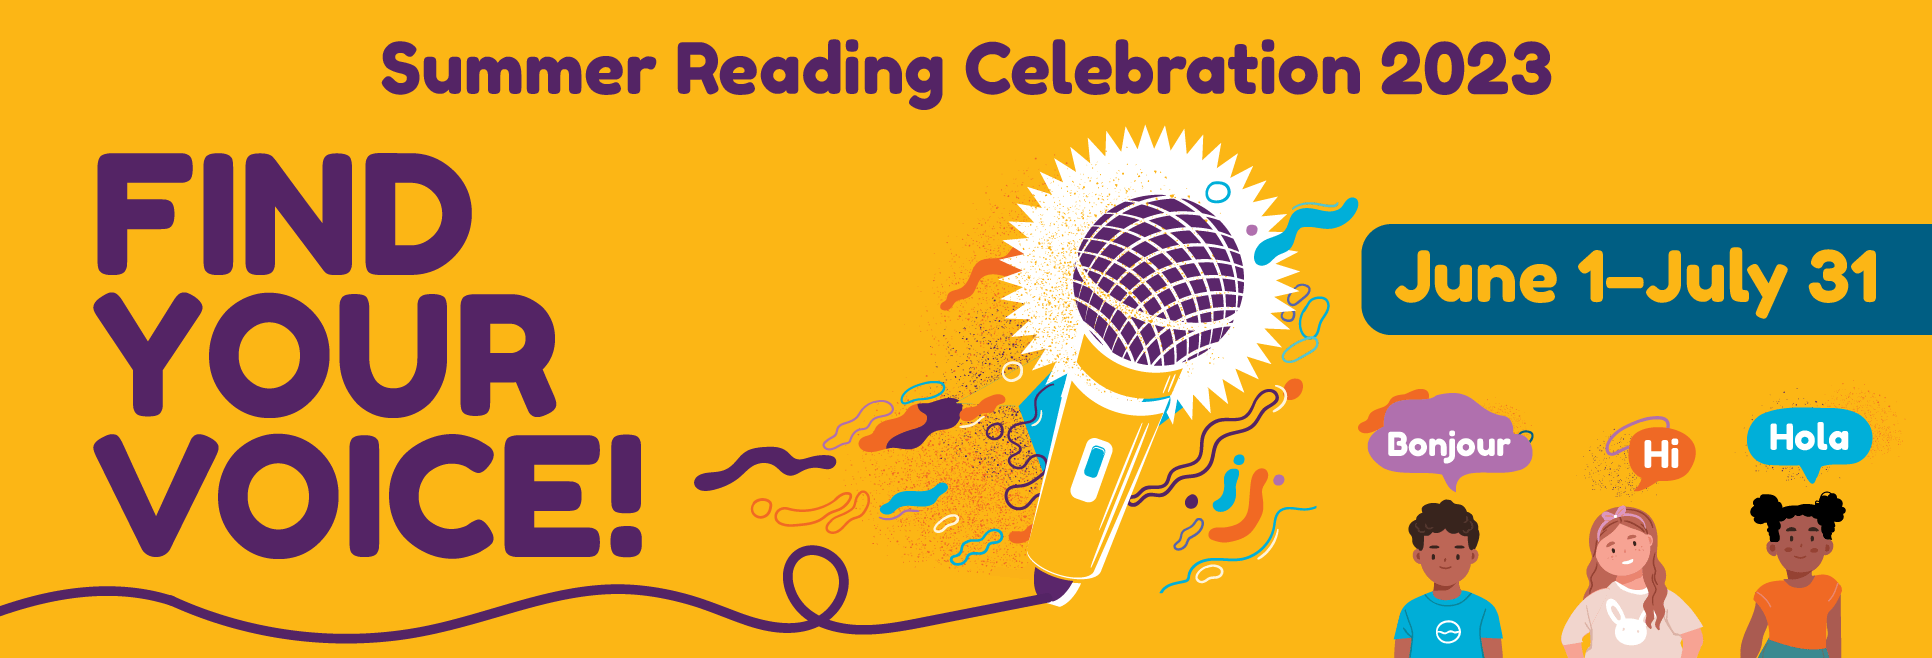 Summer Reading Celebration 2023 Kenton Library 